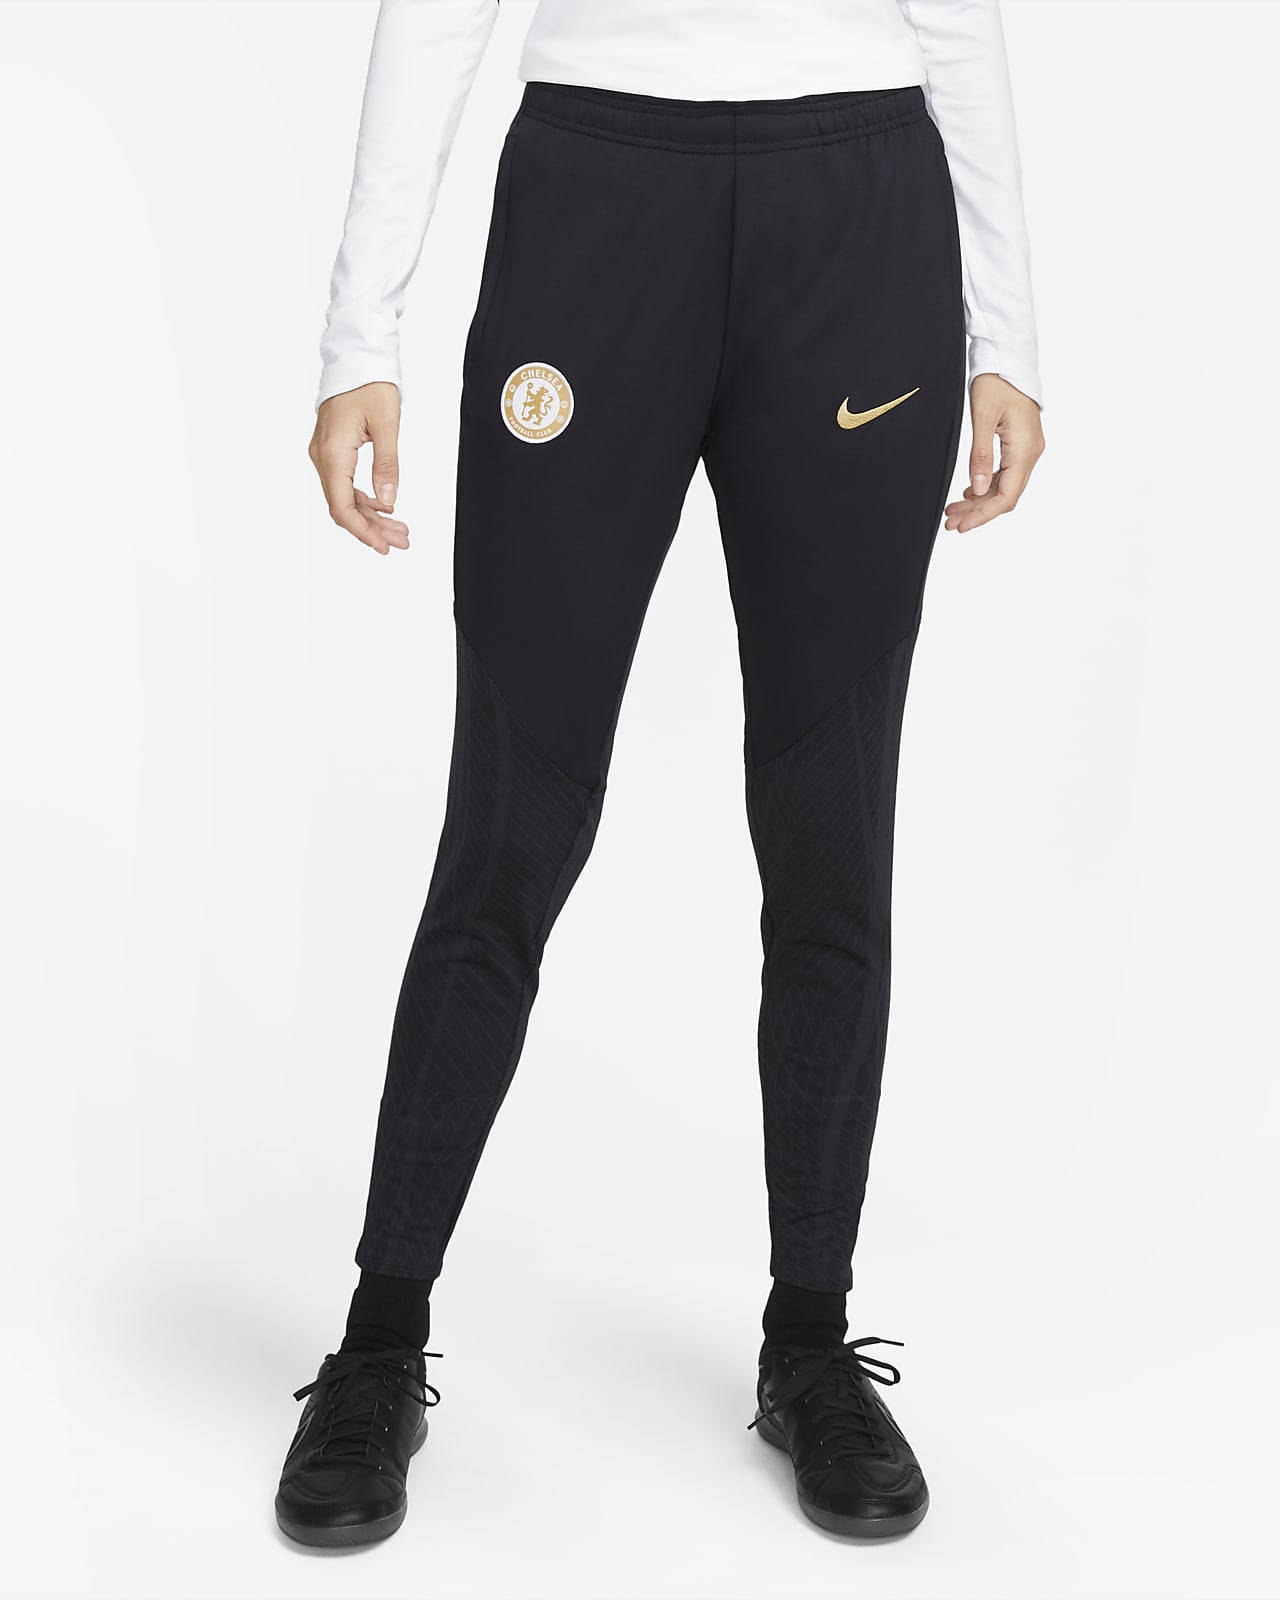 Chelsea F.C. Strike Women's Nike Dri-FIT Knit Football Pants